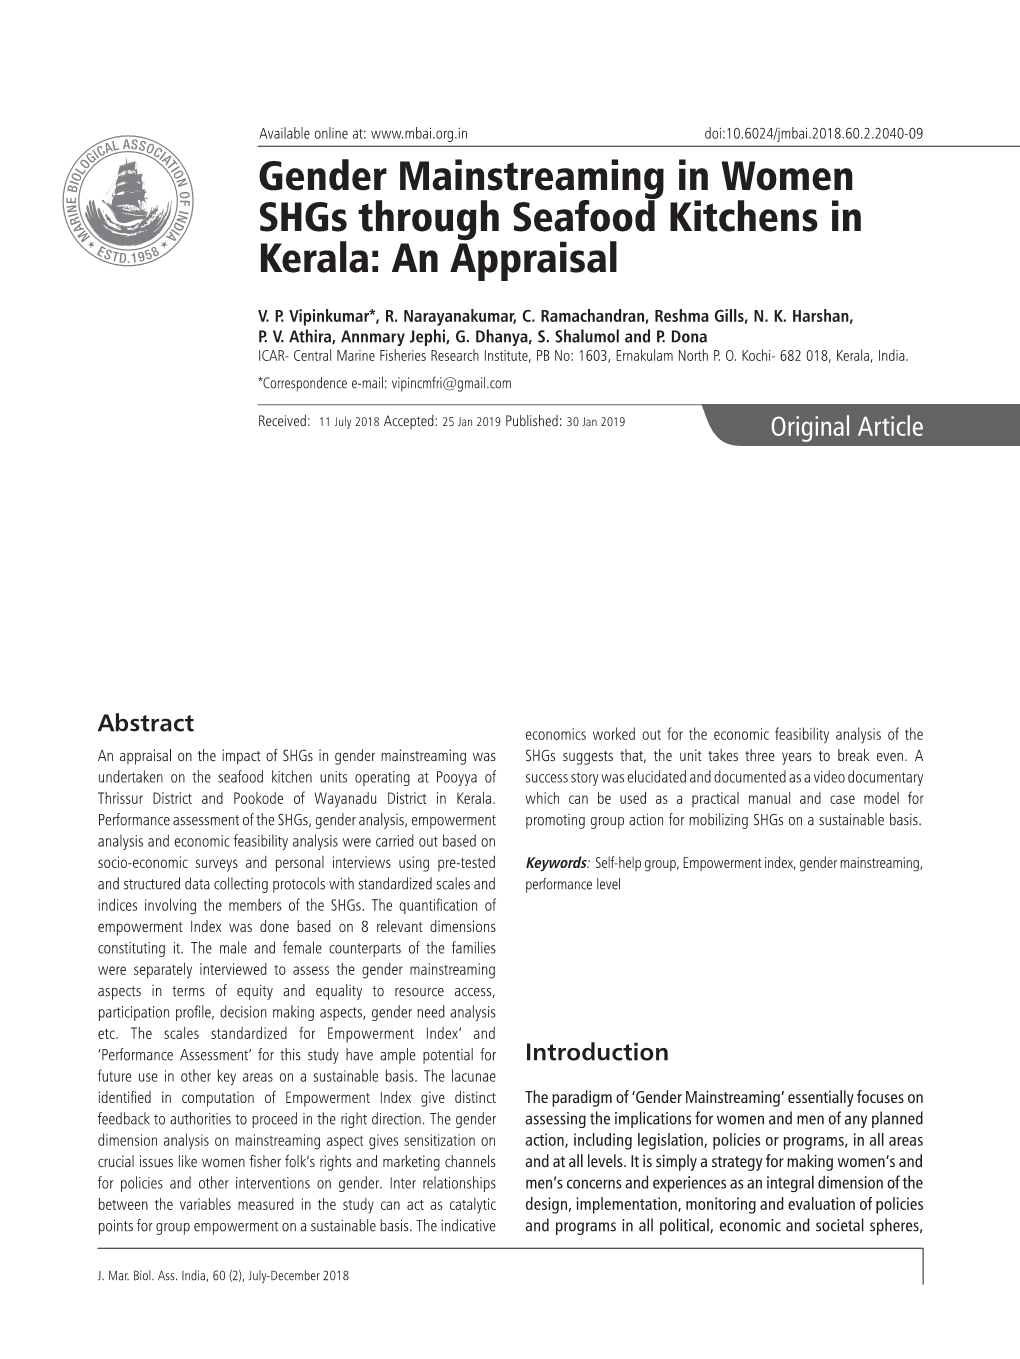 Gender Mainstreaming in Women Shgs Through Seafood Kitchens in Kerala: an Appraisal